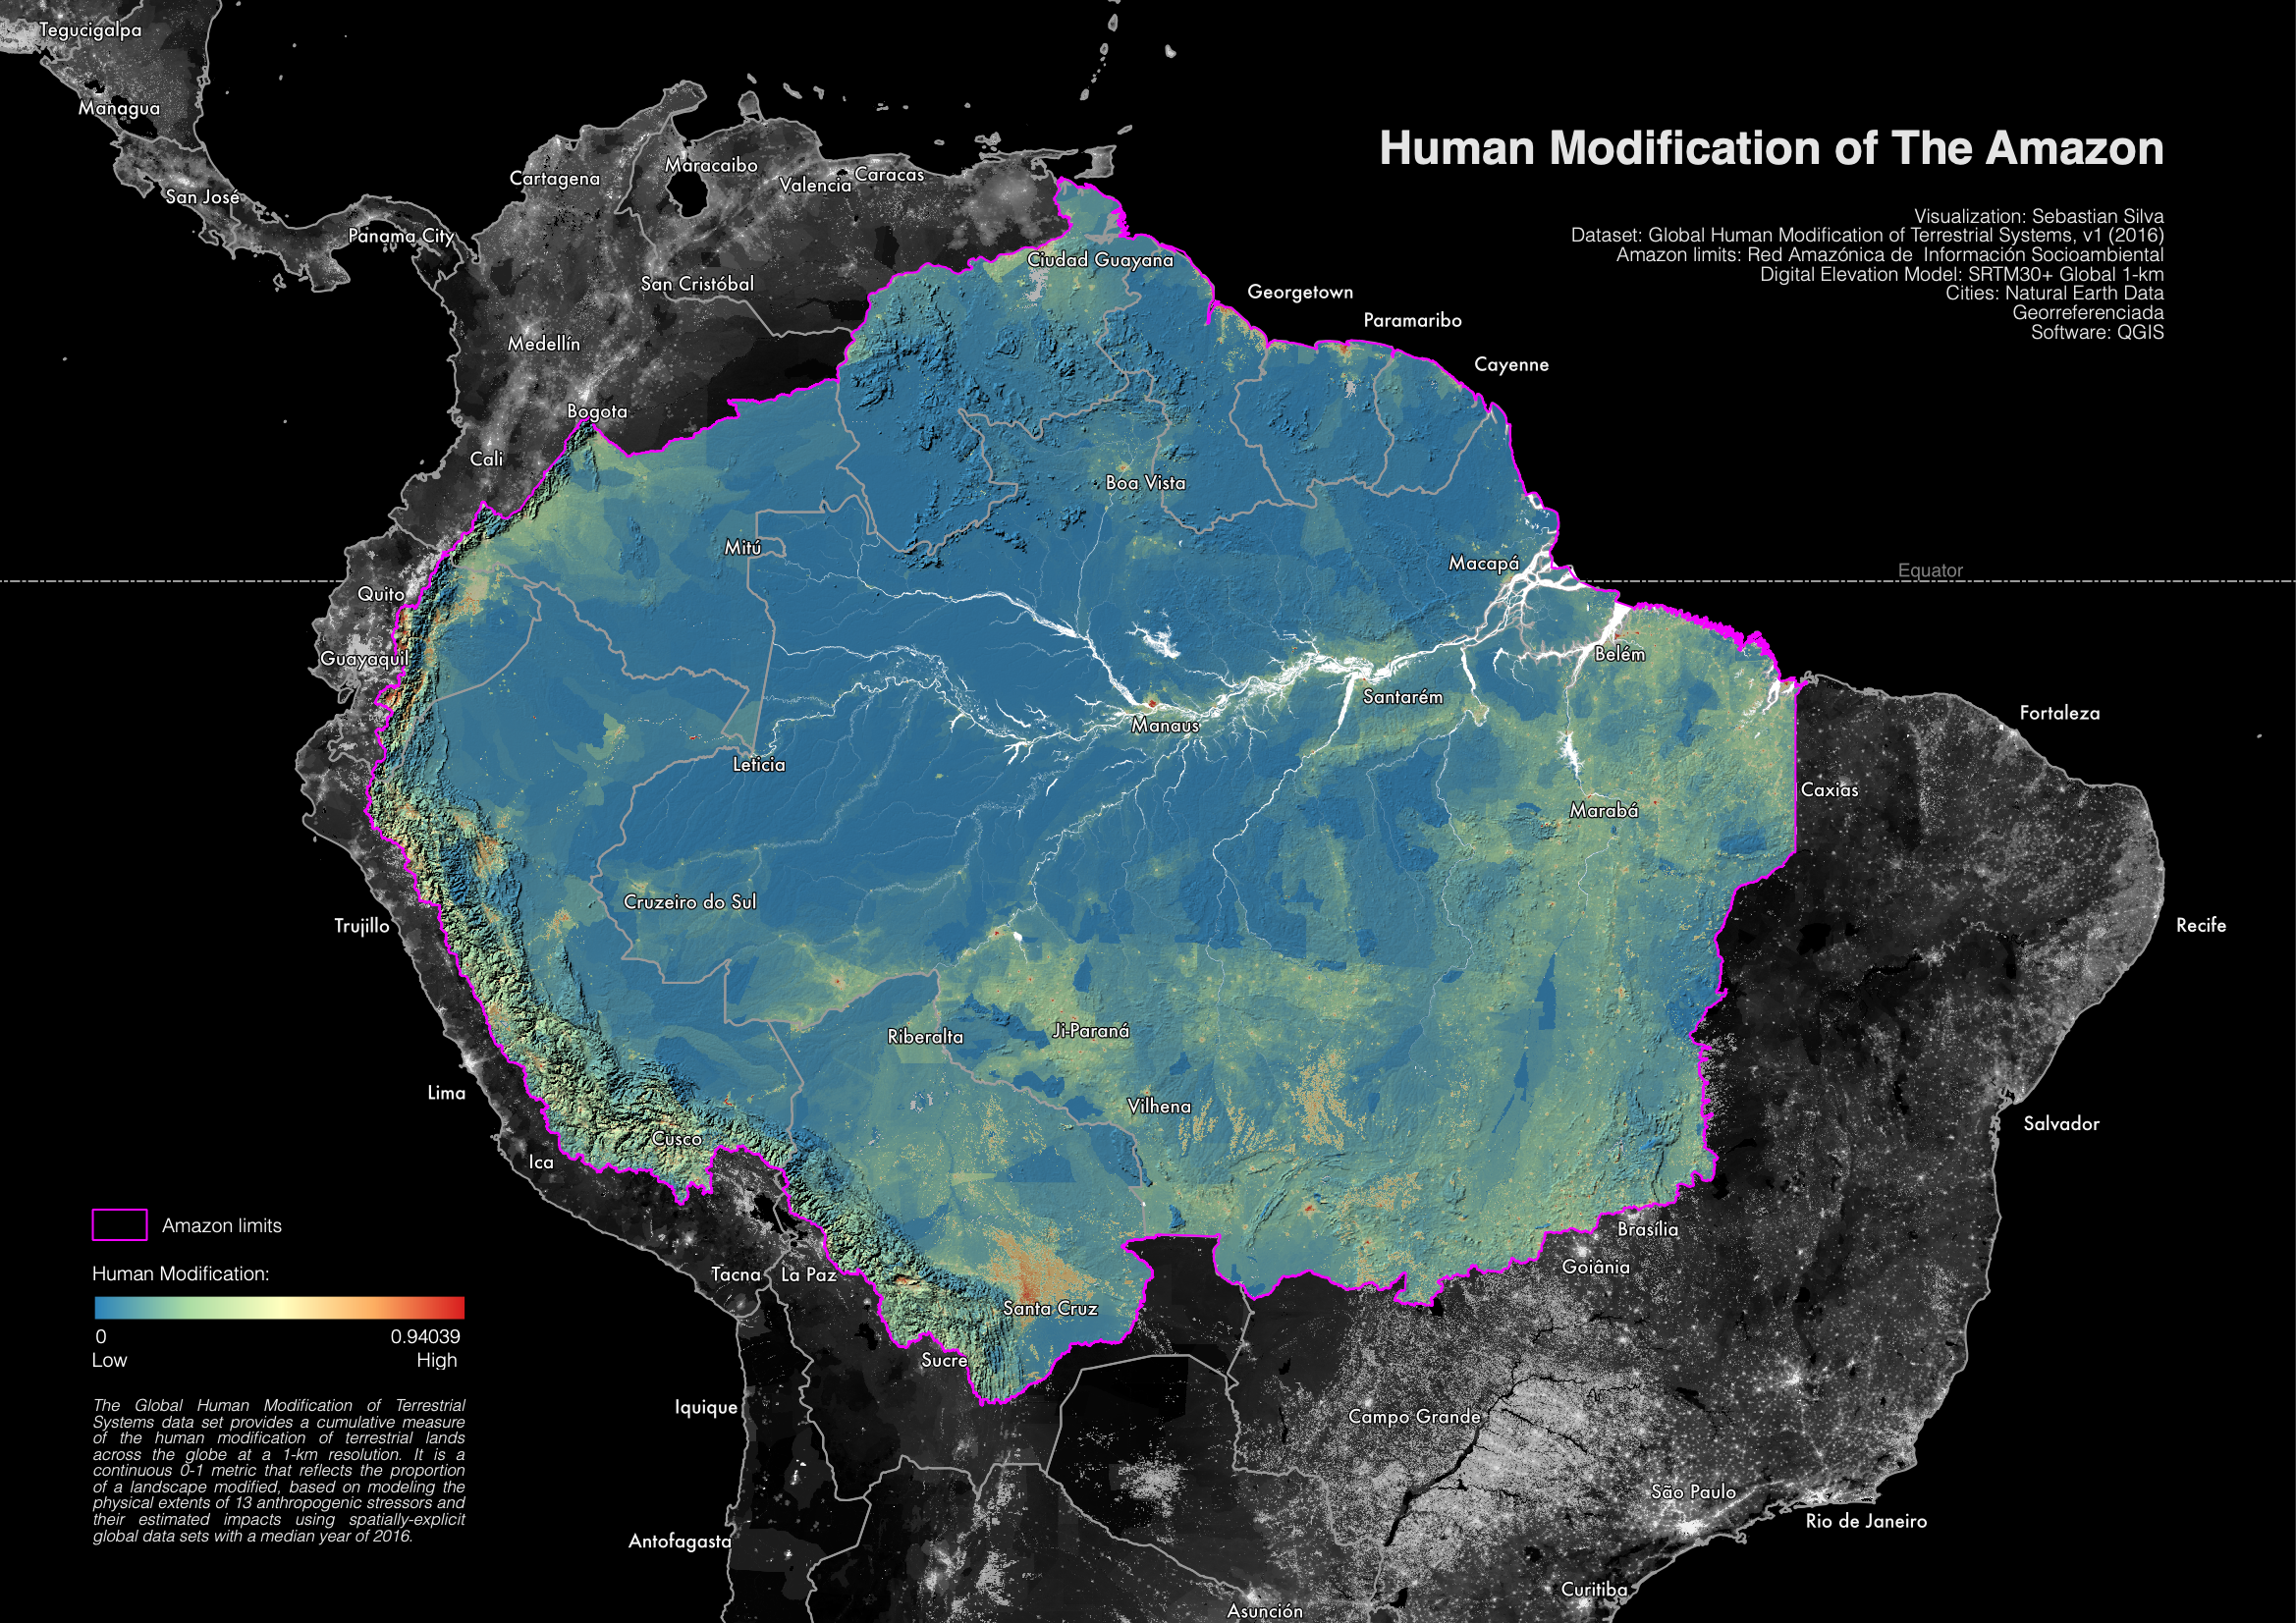 Human Modification of the Amazon